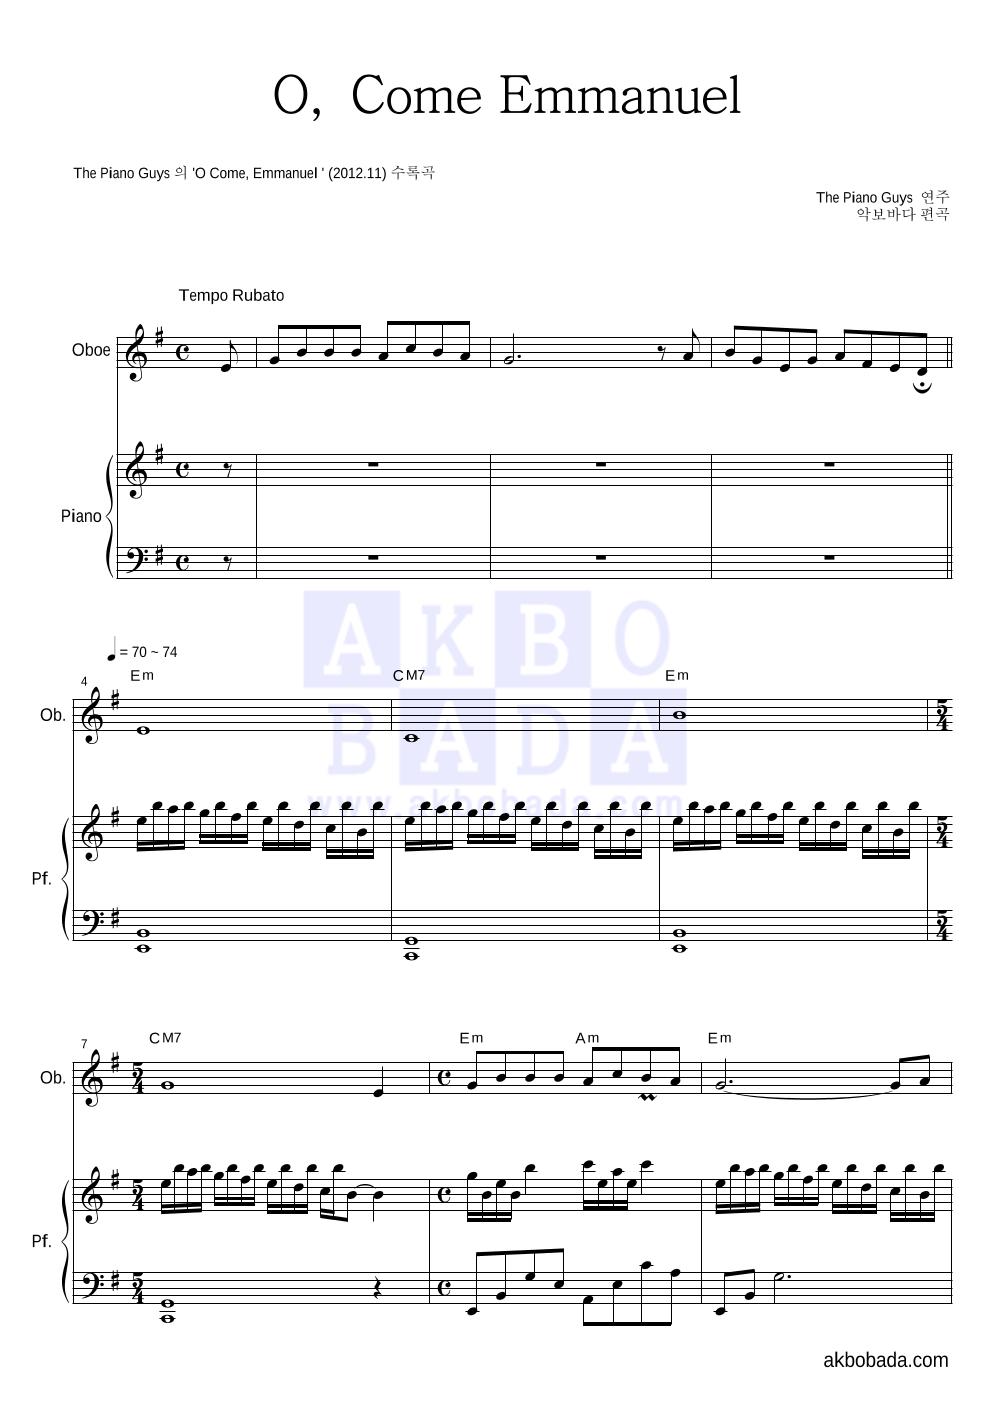 The Piano Guys - O Come, Emmanuel 오보에&피아노 악보 